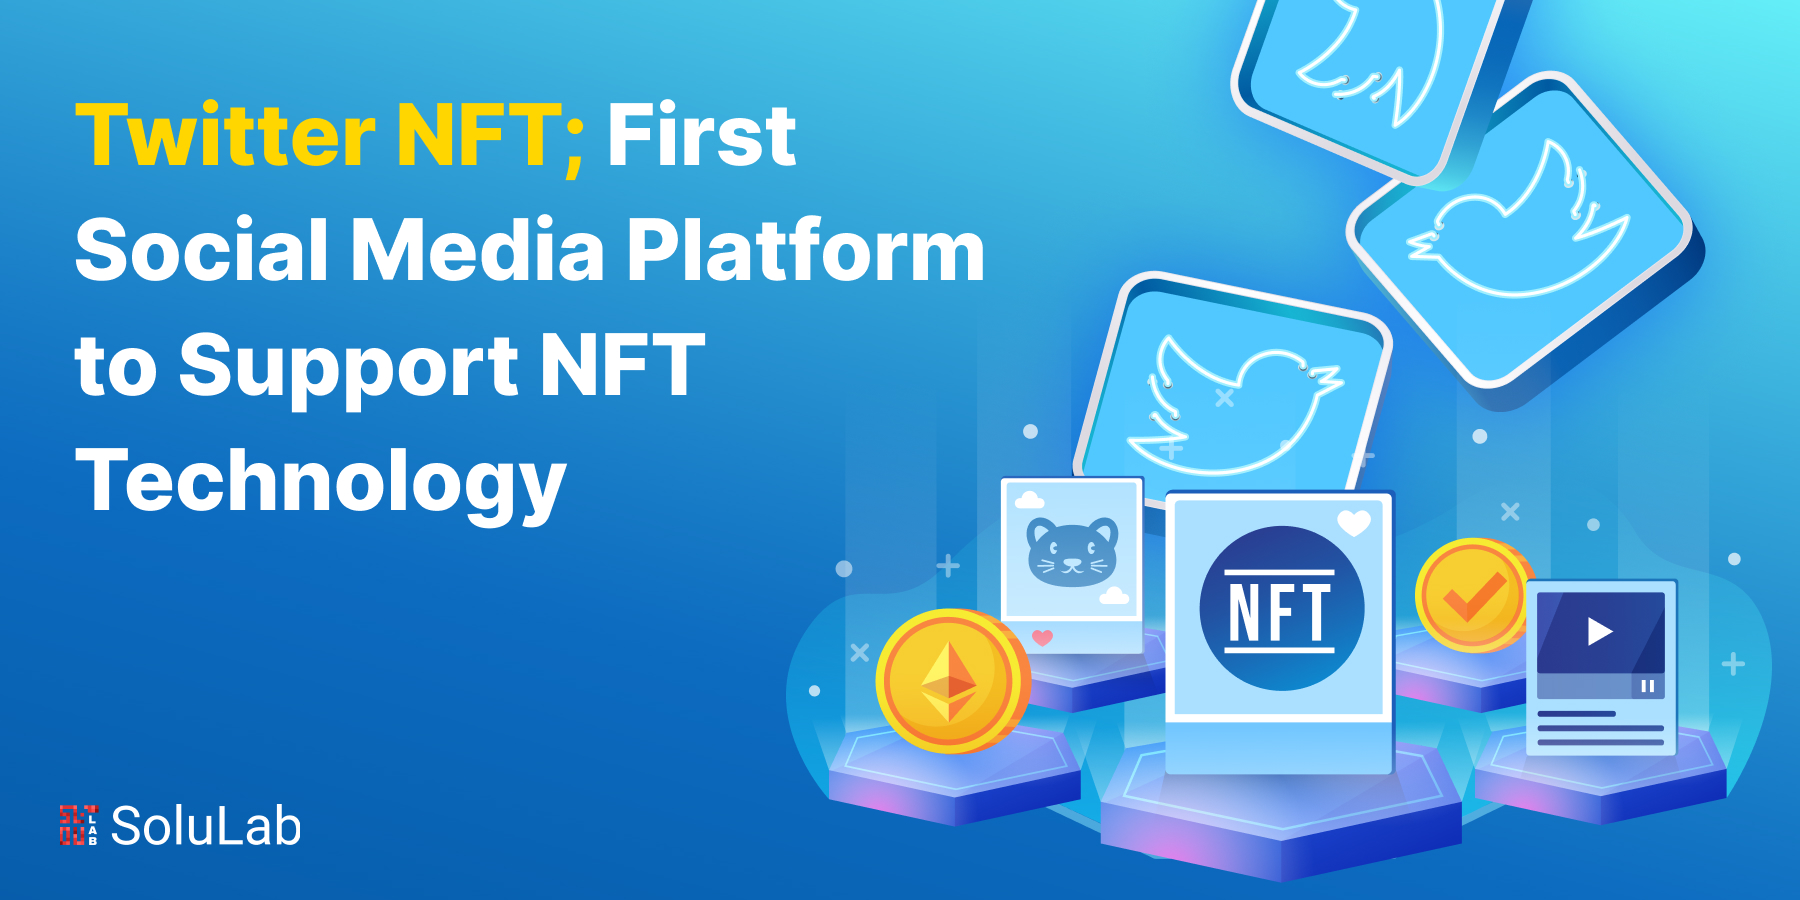 Twitter NFT; First Social Media Platform to Support NFT Technology